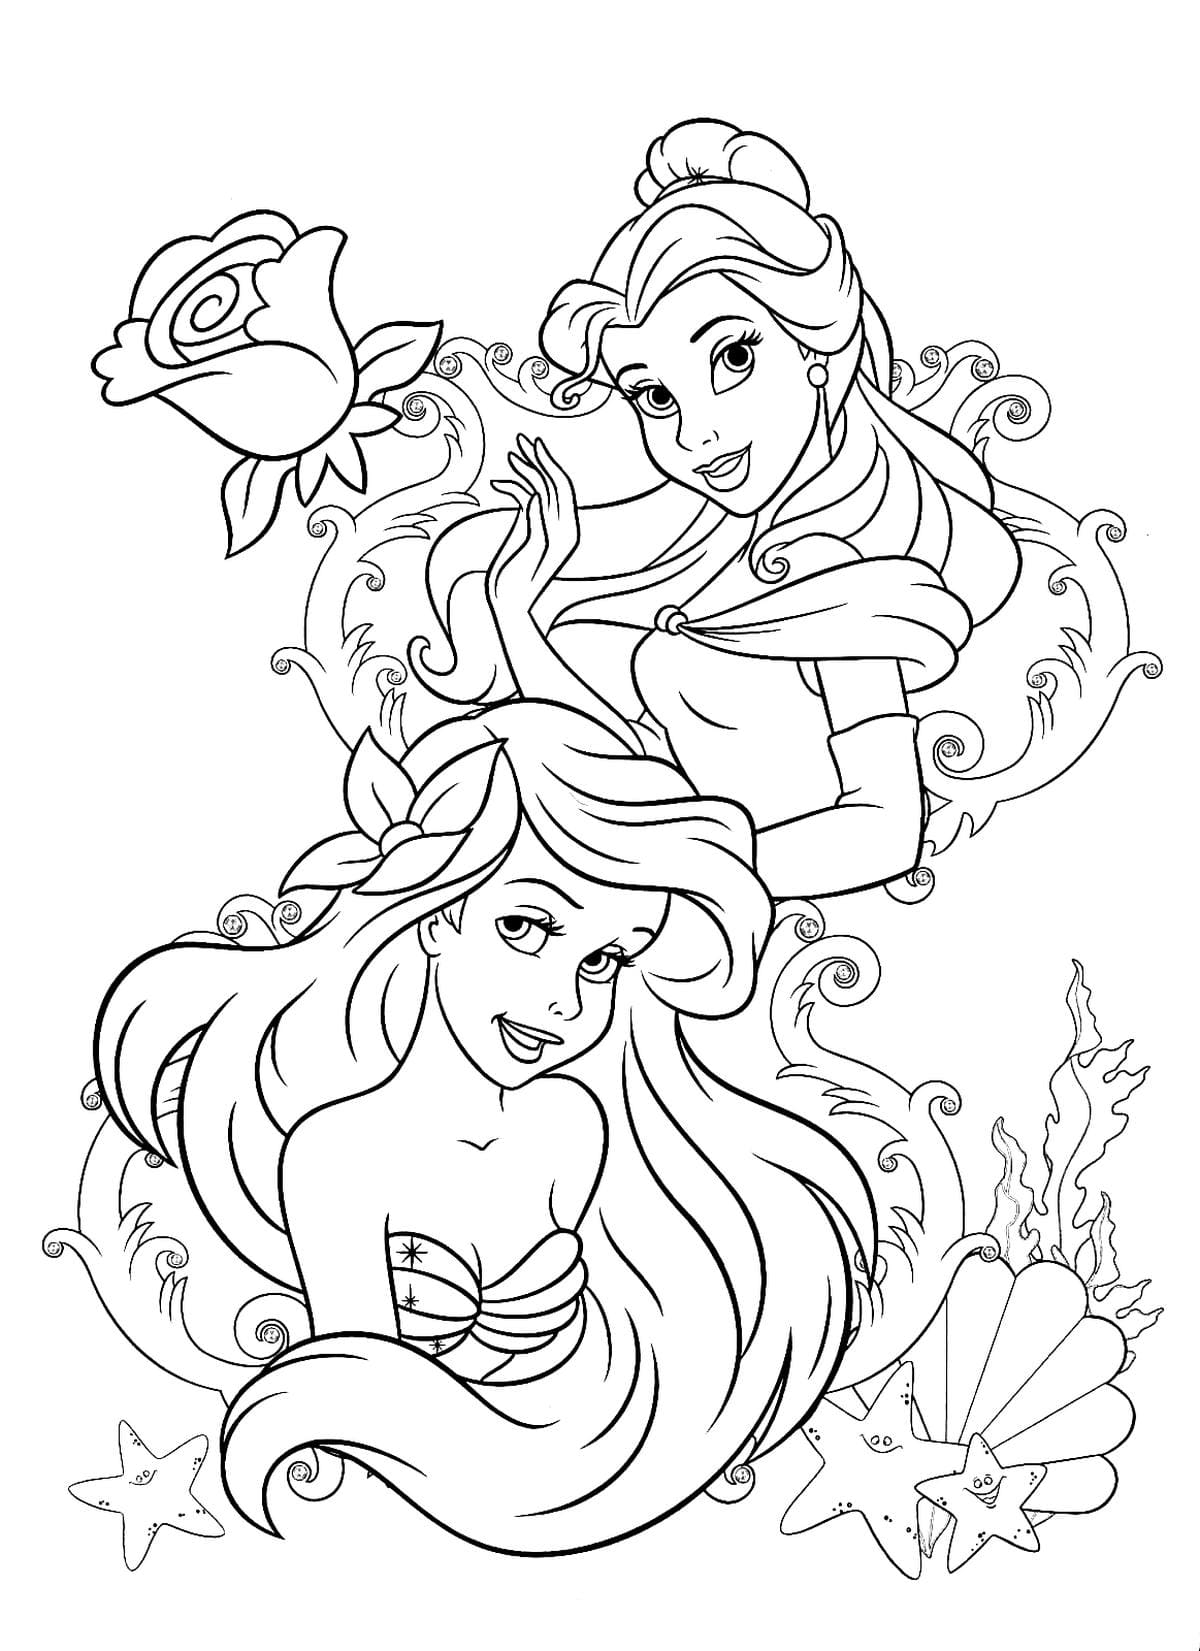 ariel-princess-coloring-page-disney-coloring-pages-mermaid-coloring